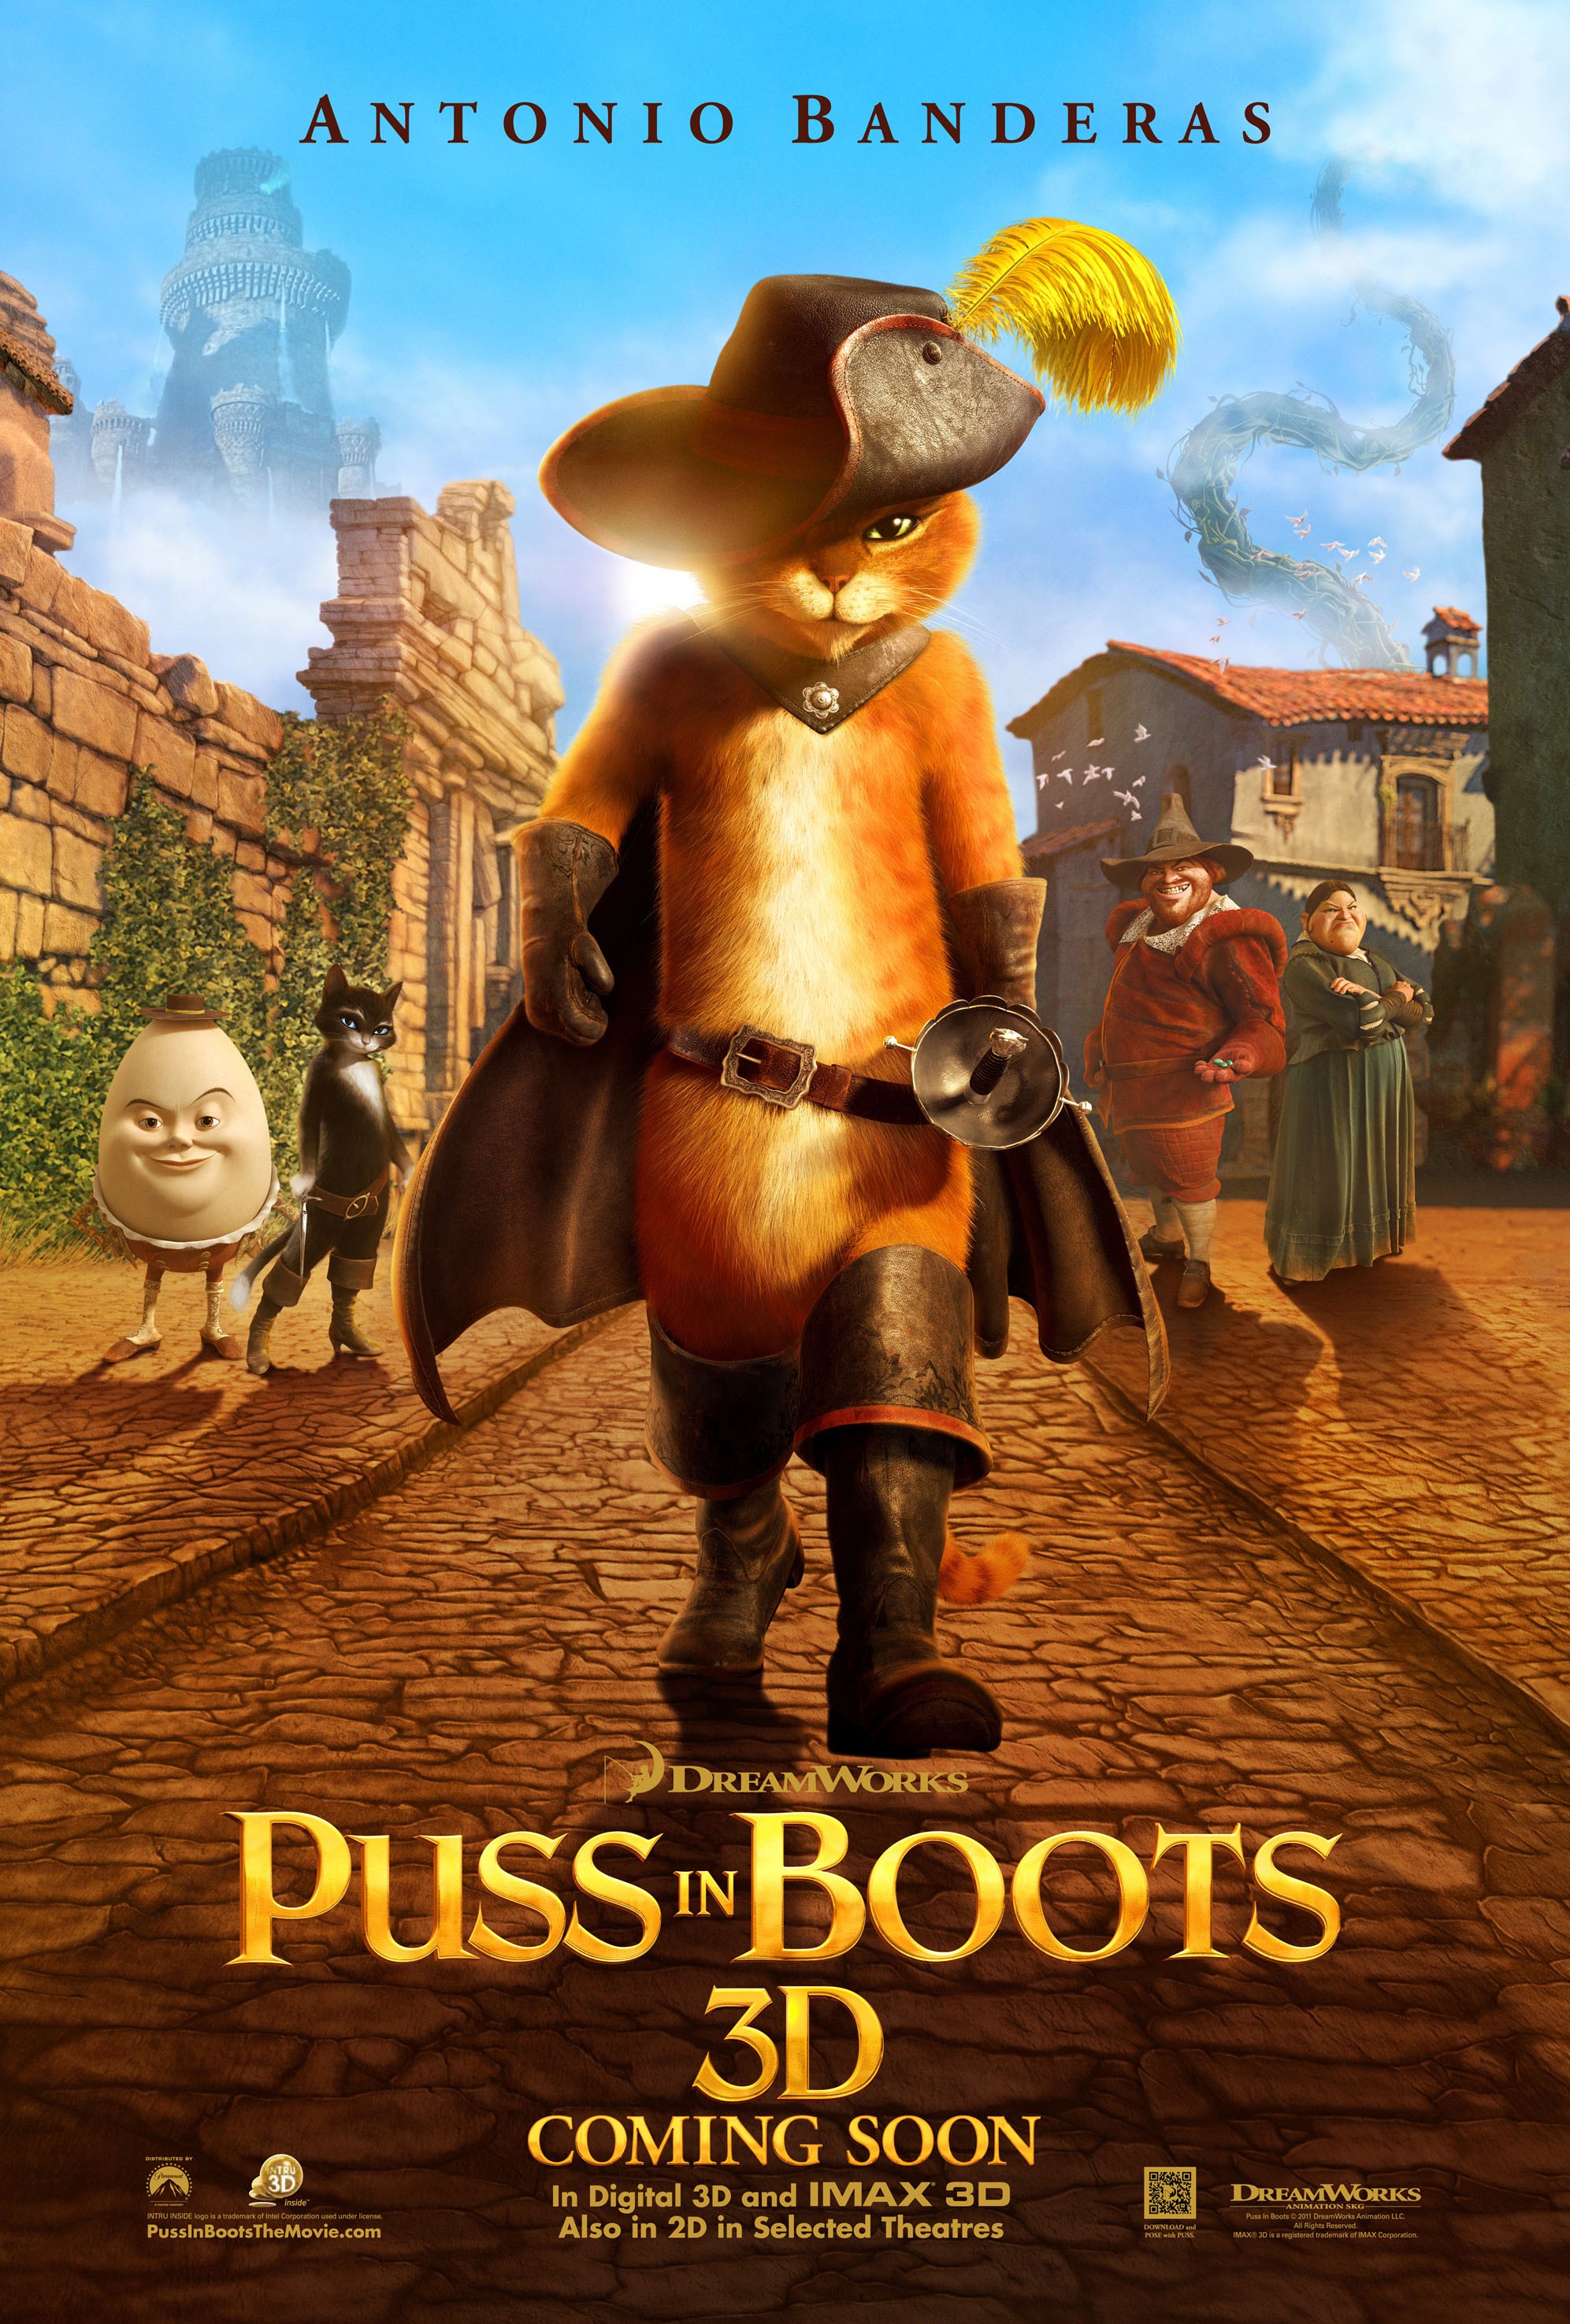 Puss in Boots (film) | WikiShrek | Fandom powered by Wikia